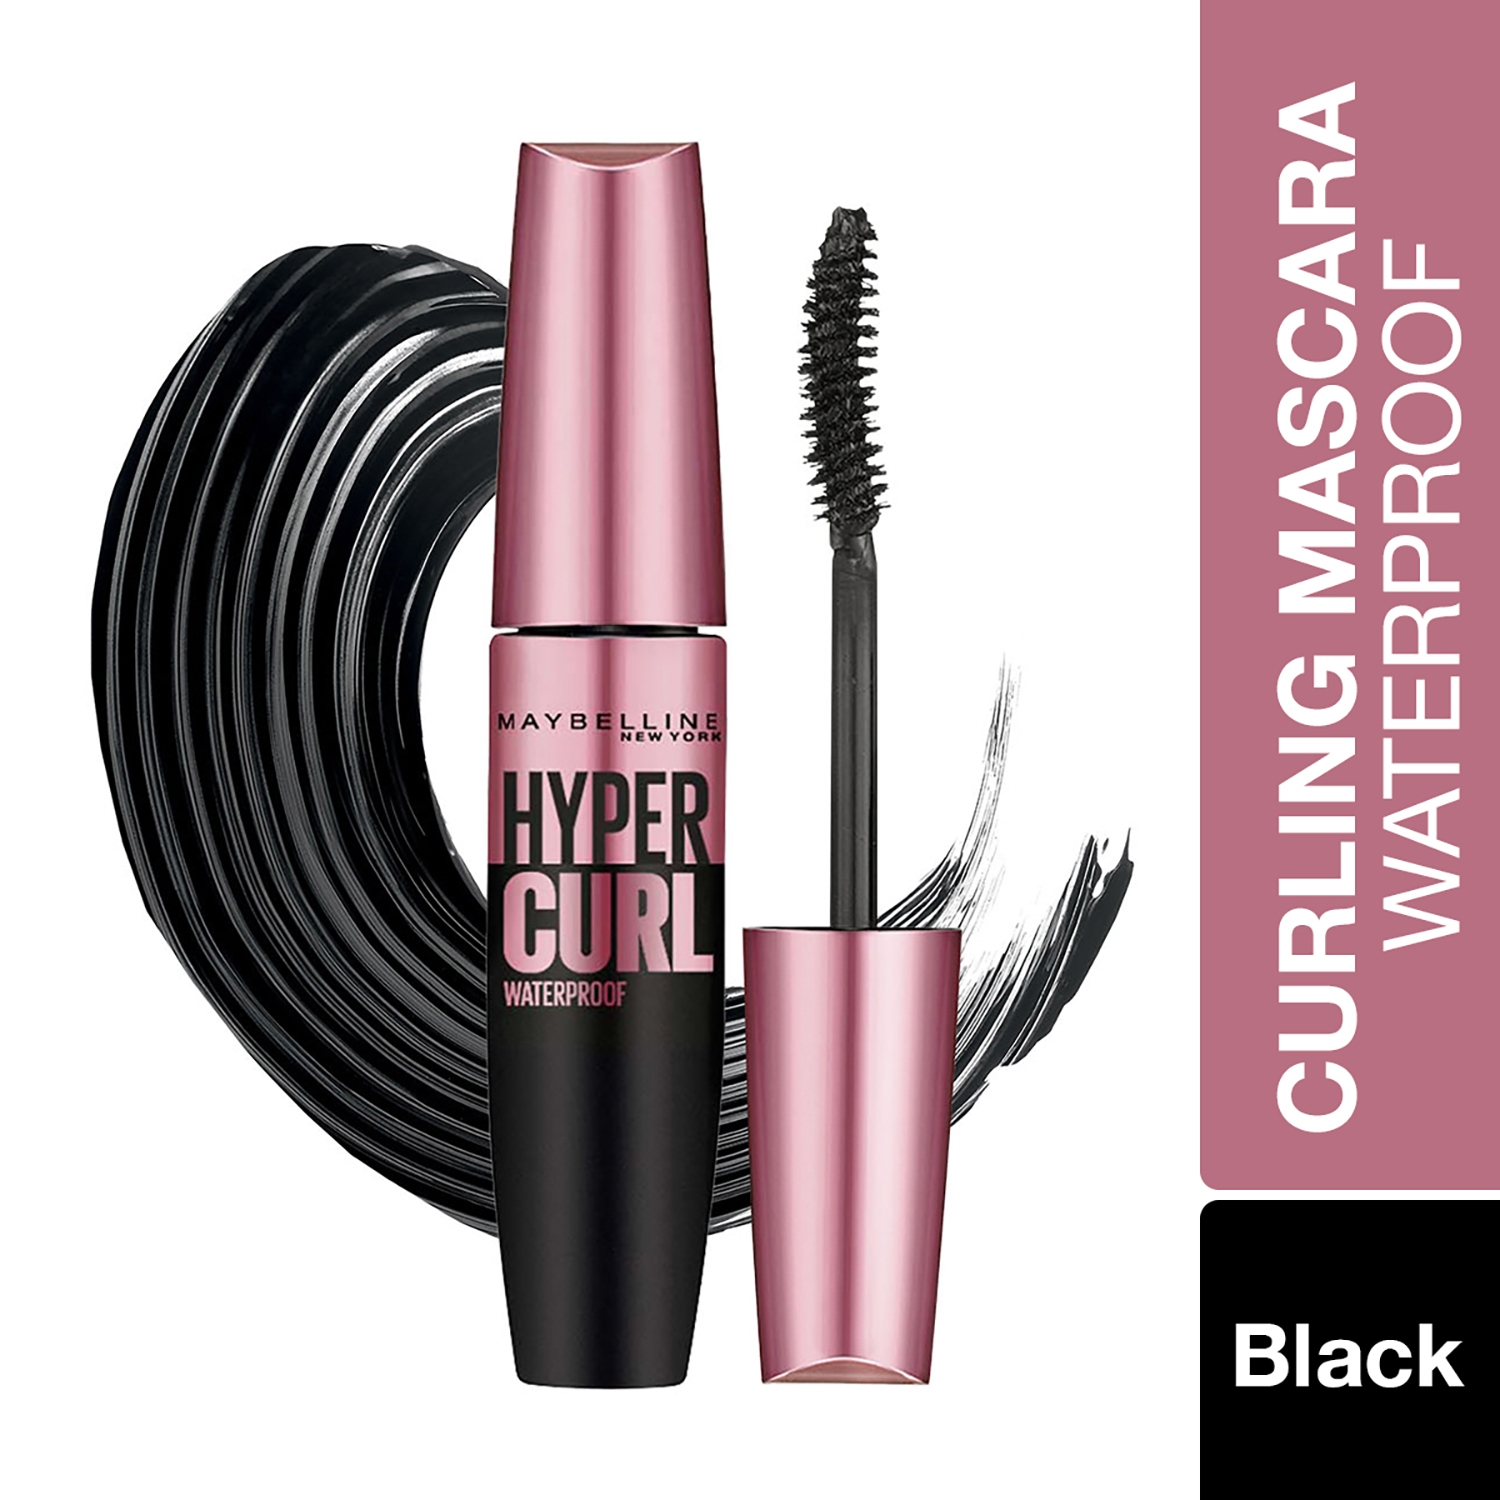 Maybelline New York | Maybelline New York Hyper Curl Waterproof Mascara - Very Black (9.2ml)